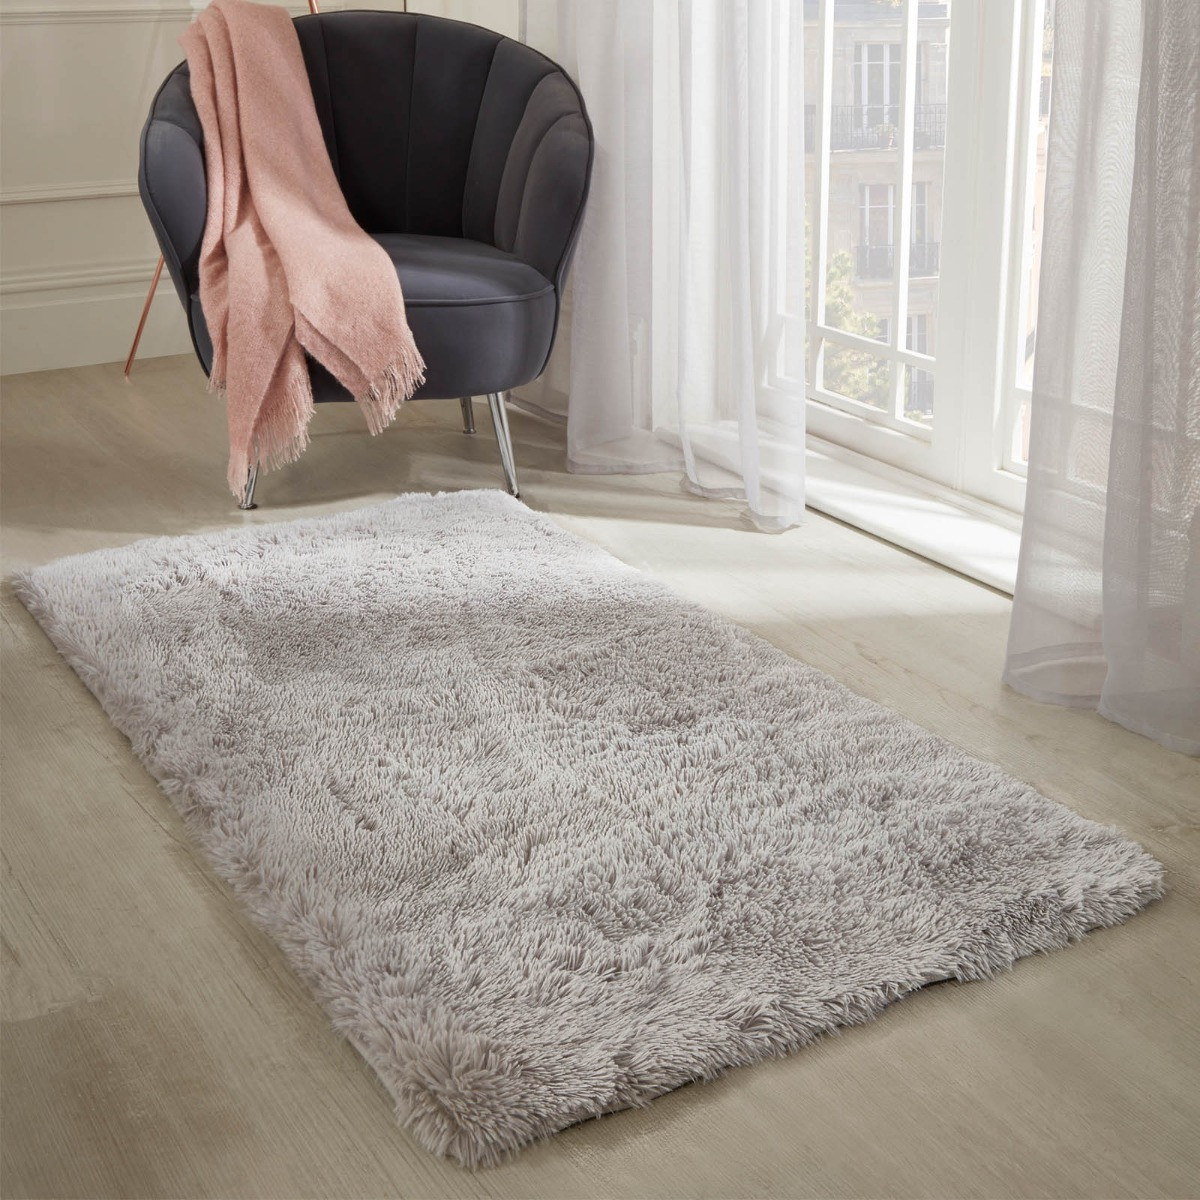 Sienna Soft Fluffy Rug Anti-Slip Plain Shaggy Floor Mat, Silver - 80 x 150cm>